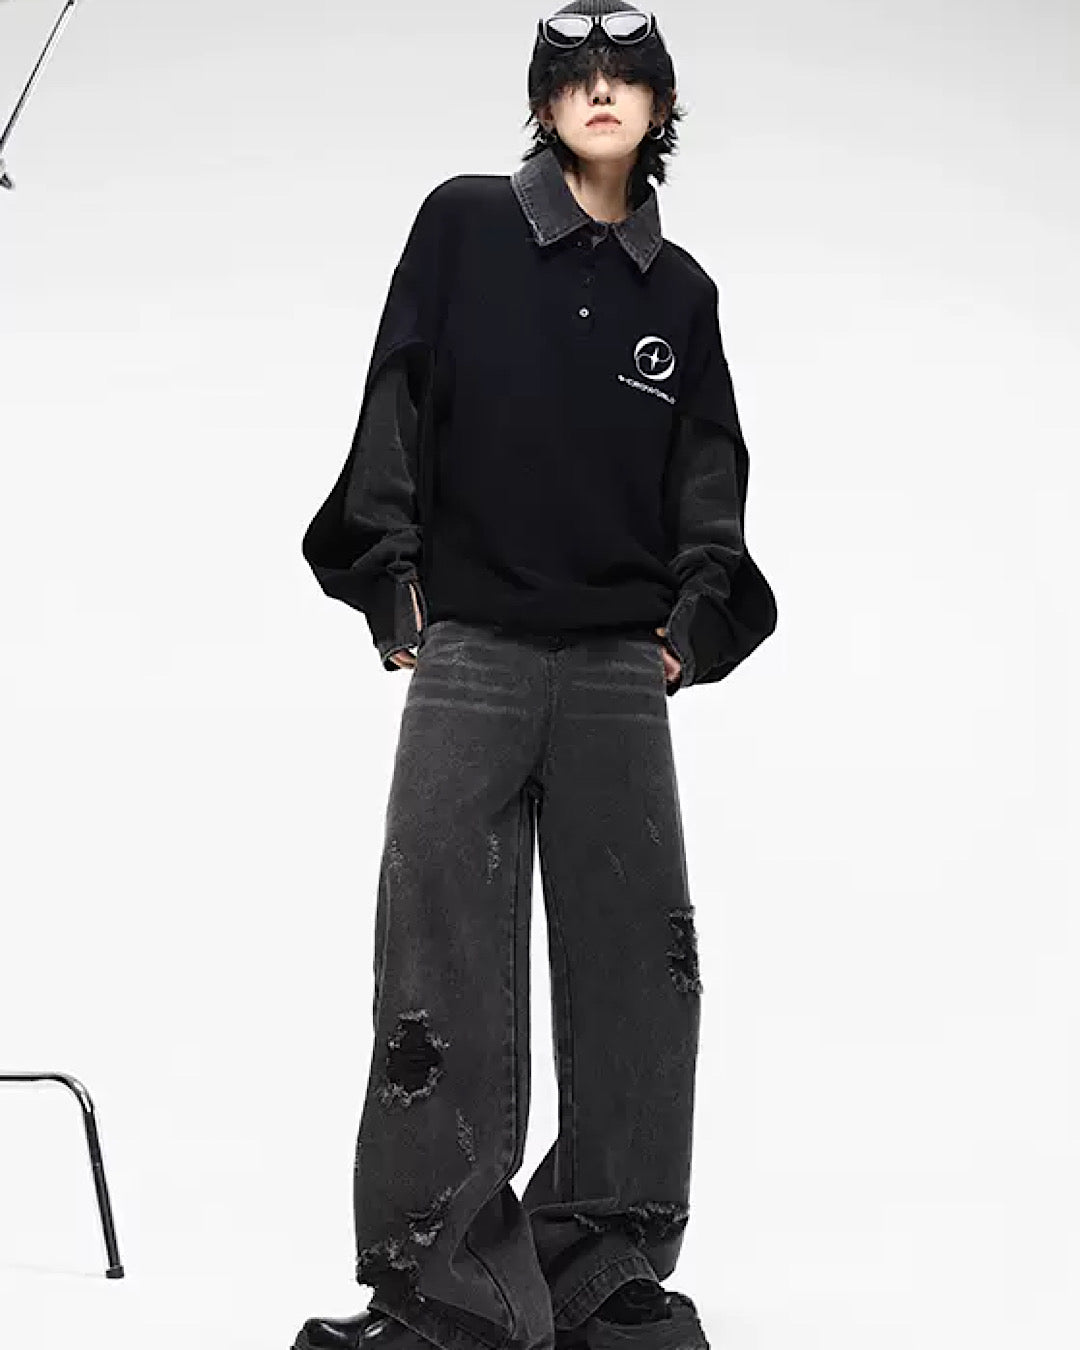 【0-CROWORLD】Black setsleeve shirt knit  CR0016